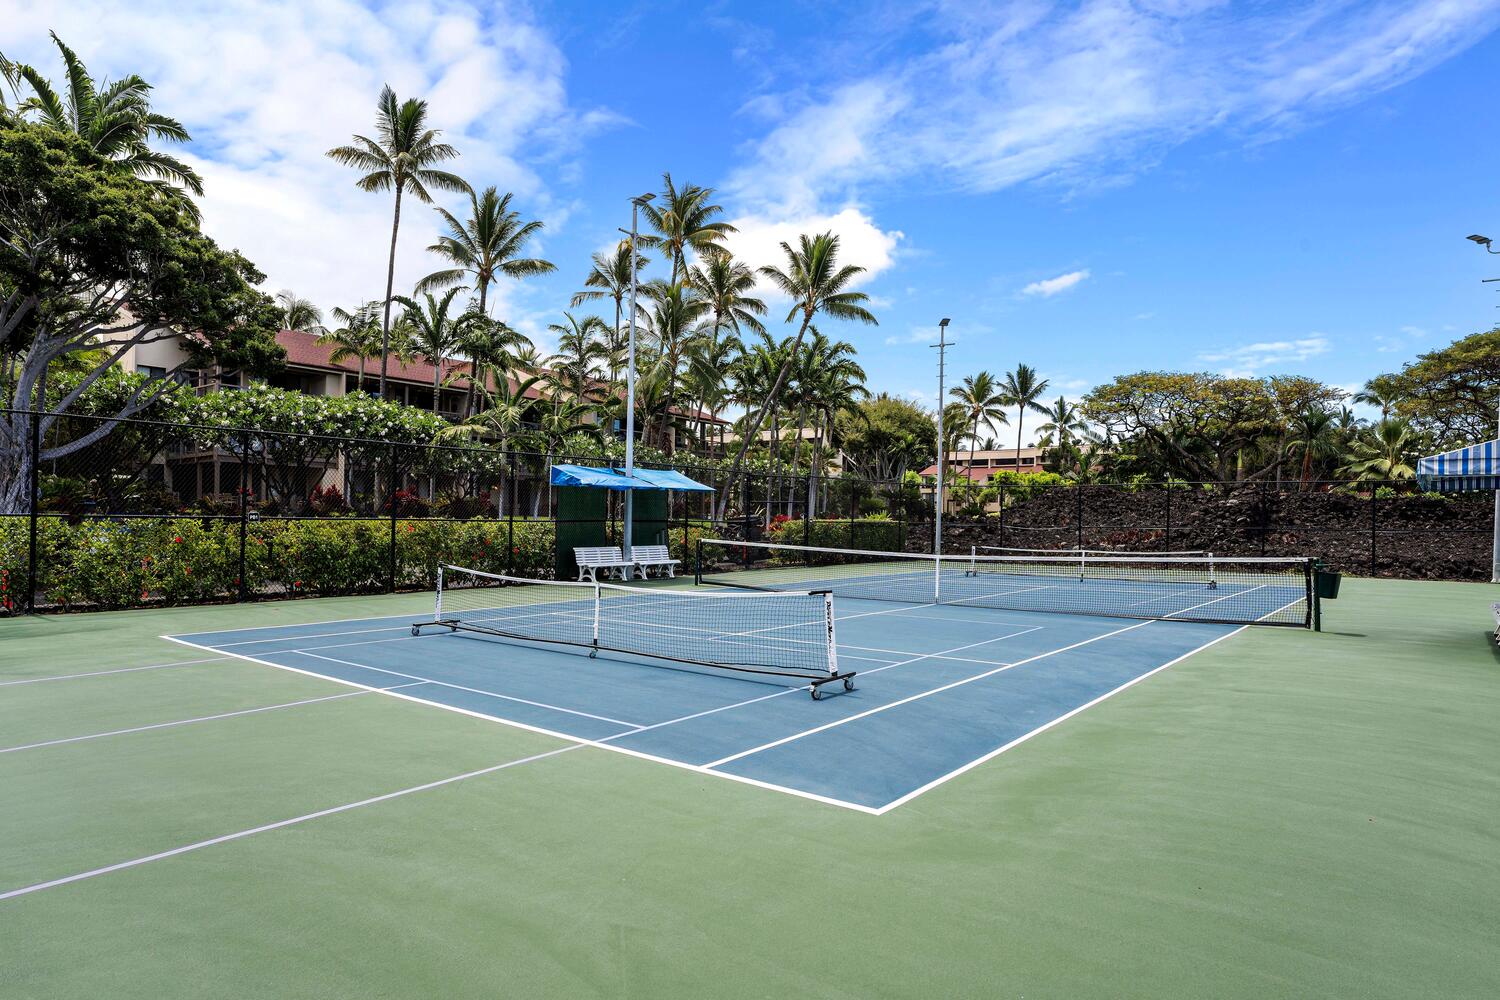 Kailua Kona Vacation Rentals, Keauhou Kona Surf & Racquet 1104 - Tennis court for a friendly match!